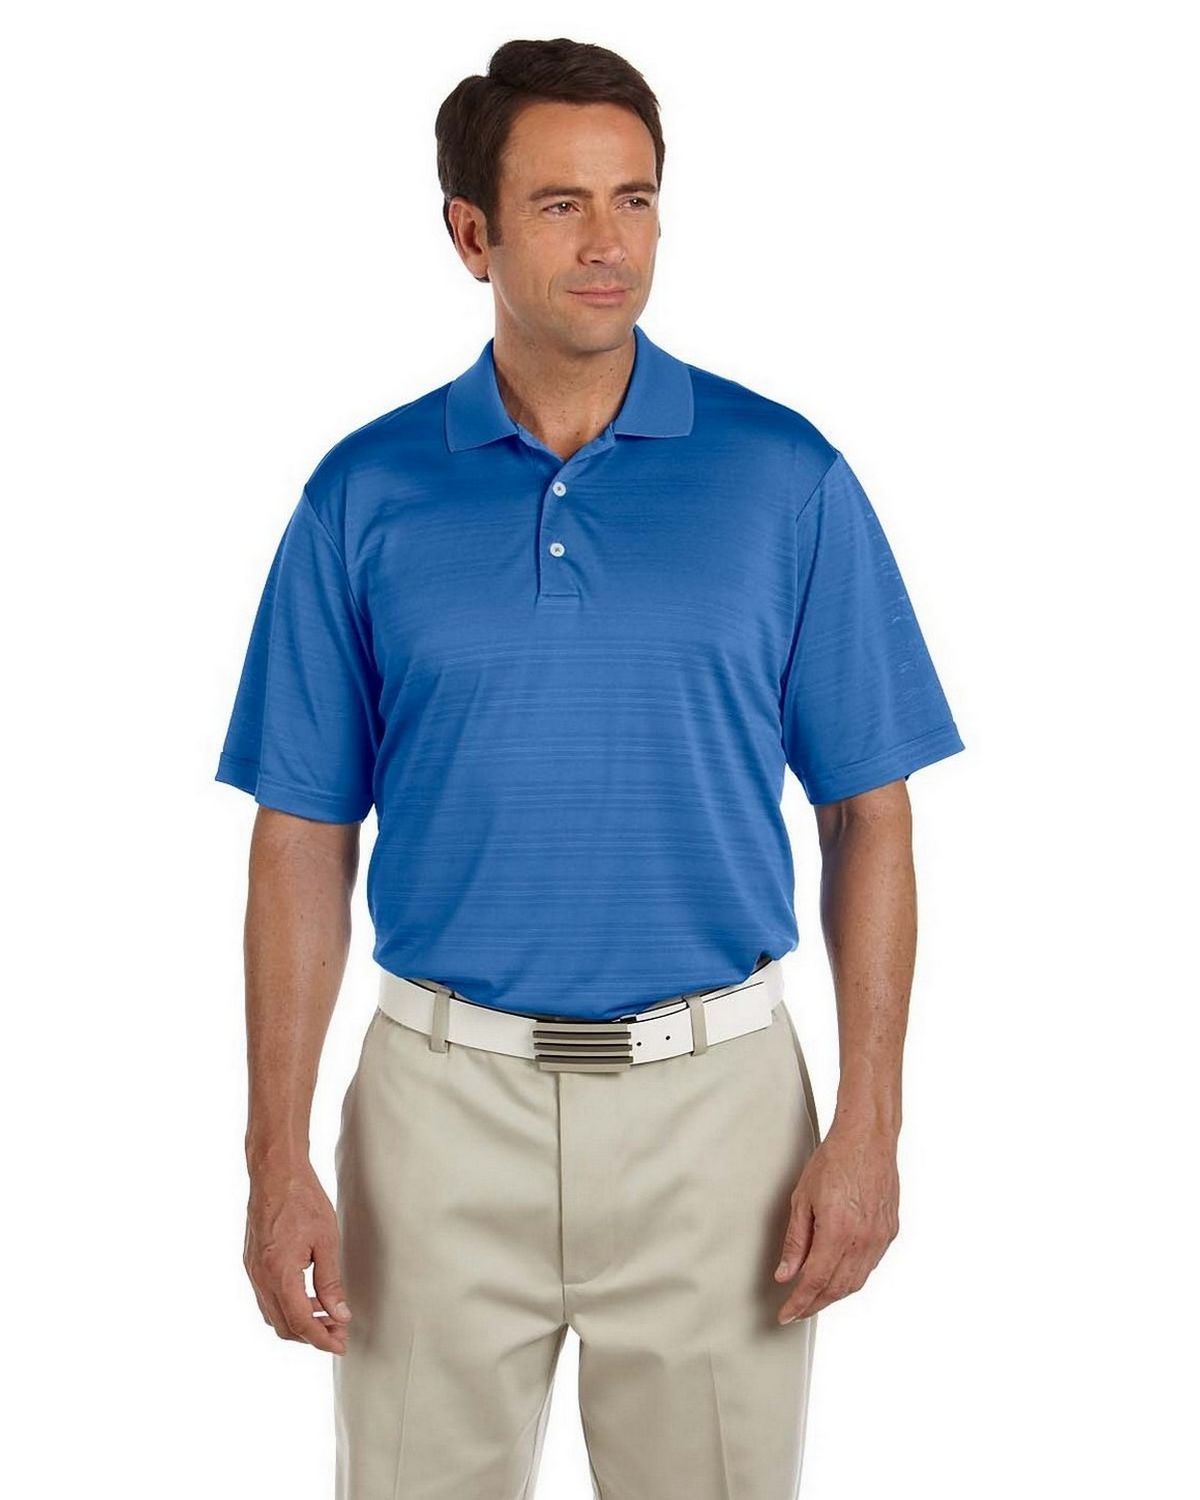 Shop Adidas Golf A161 Men’s ClimaLite Textured Short-Sleeve Polo ...